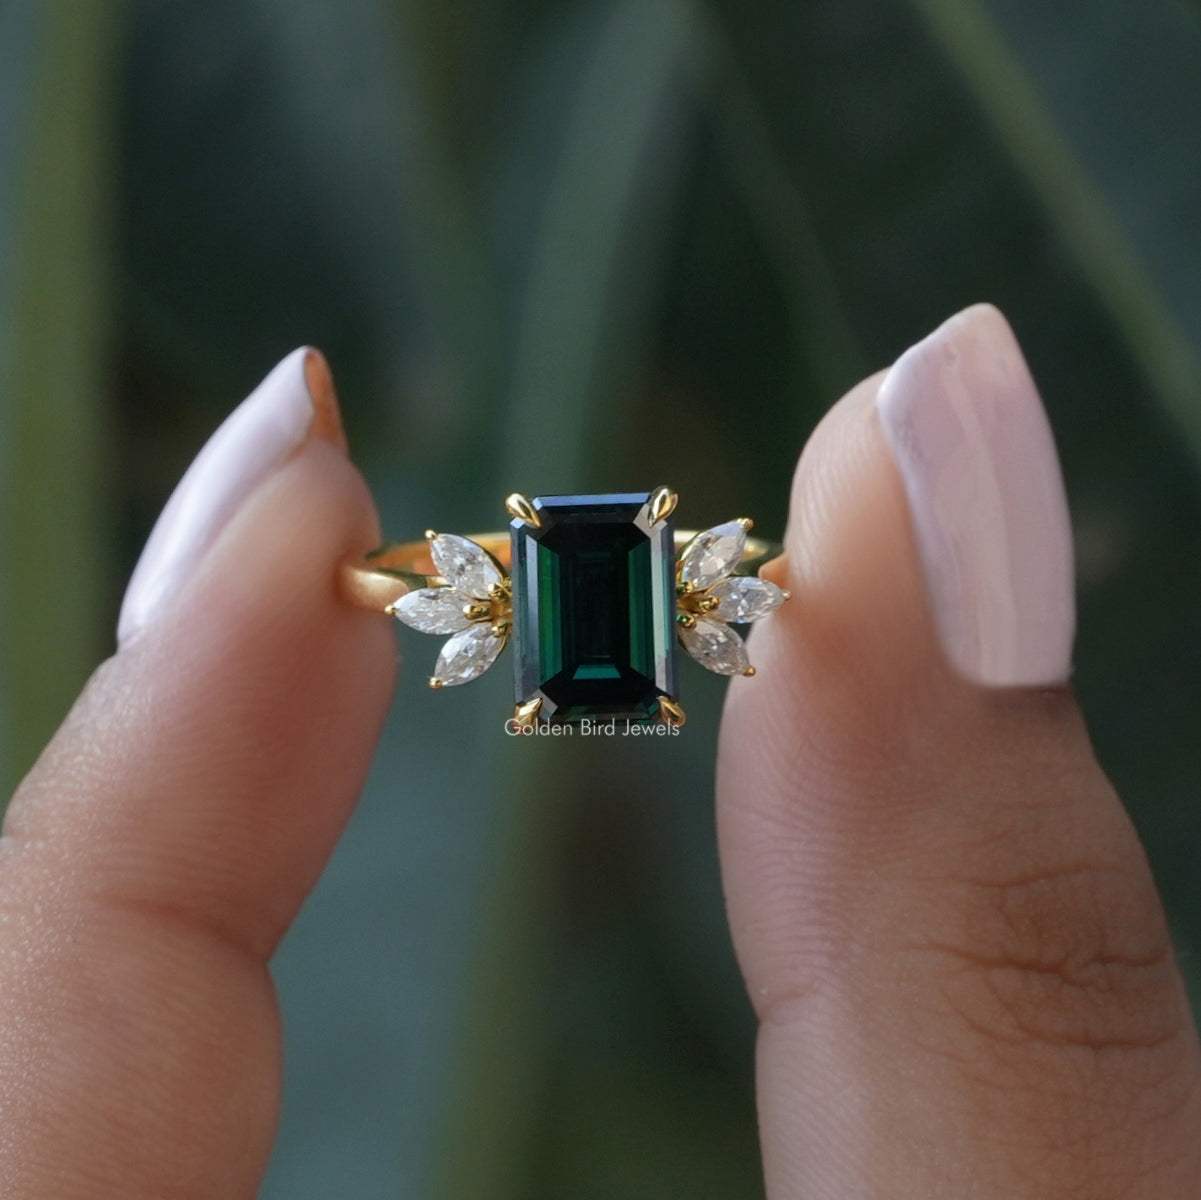 Fancy gems 4 carats 8x10mm dark| Alibaba.com